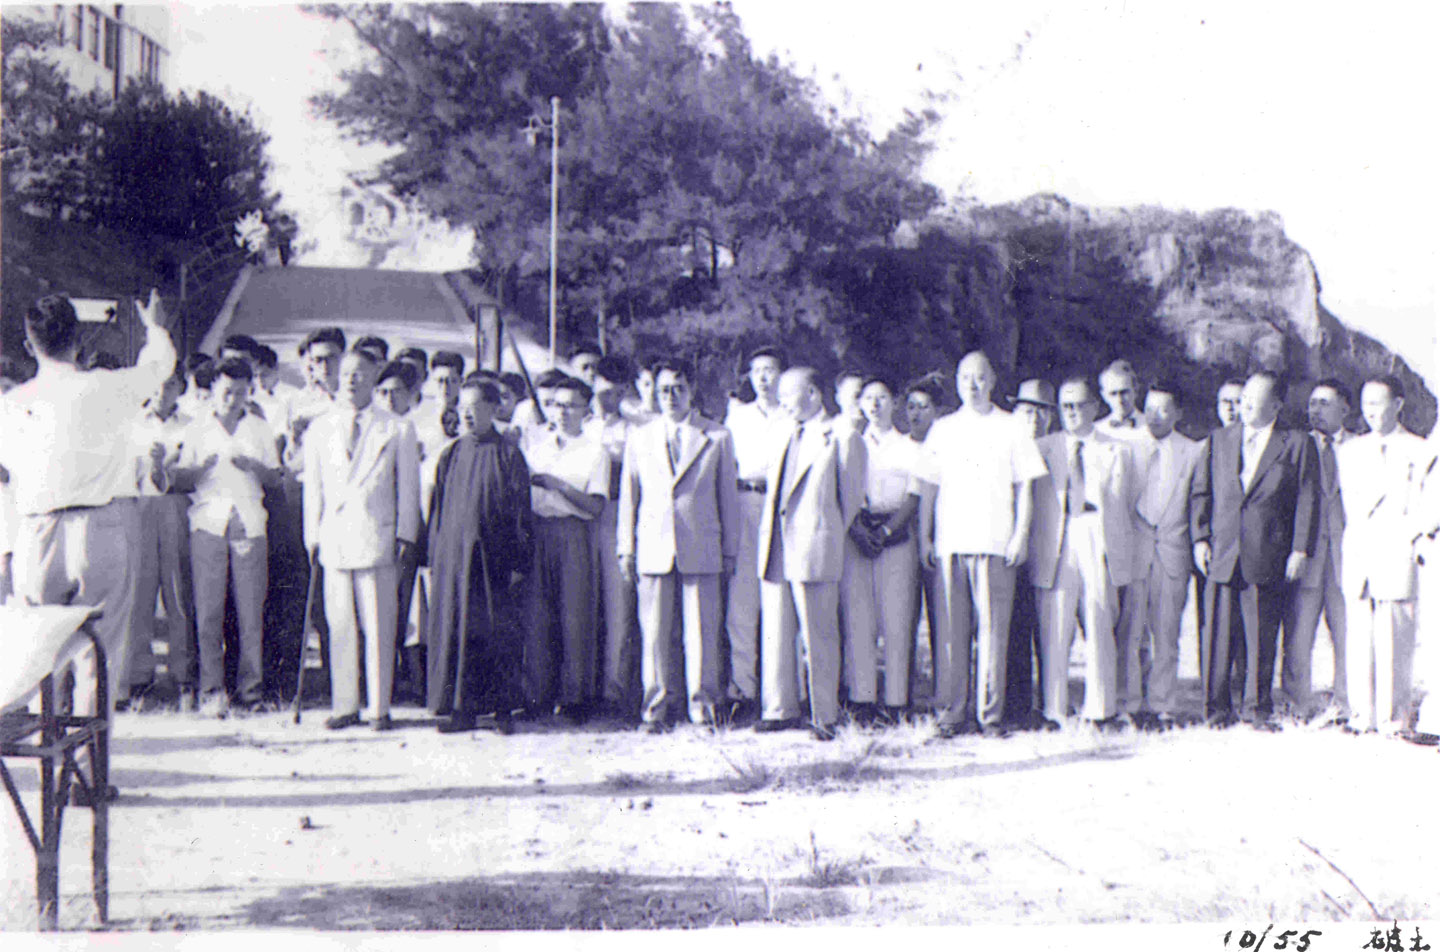 Ground-breaking Ceremony of Farm Road Campus (1955)